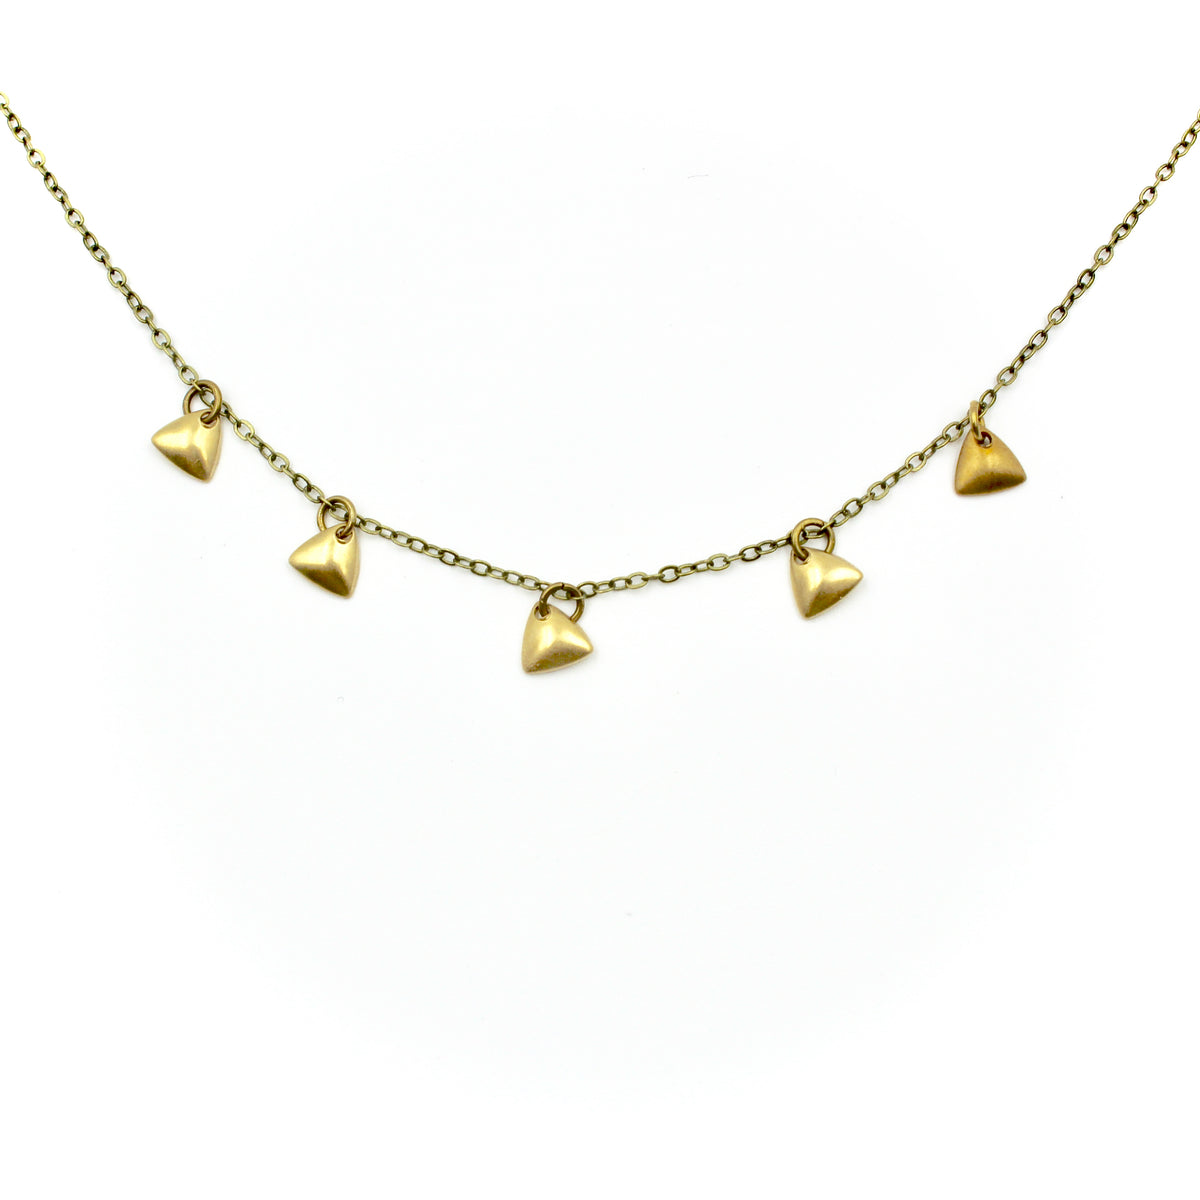 Sprinkle Necklace - Brass Triangle